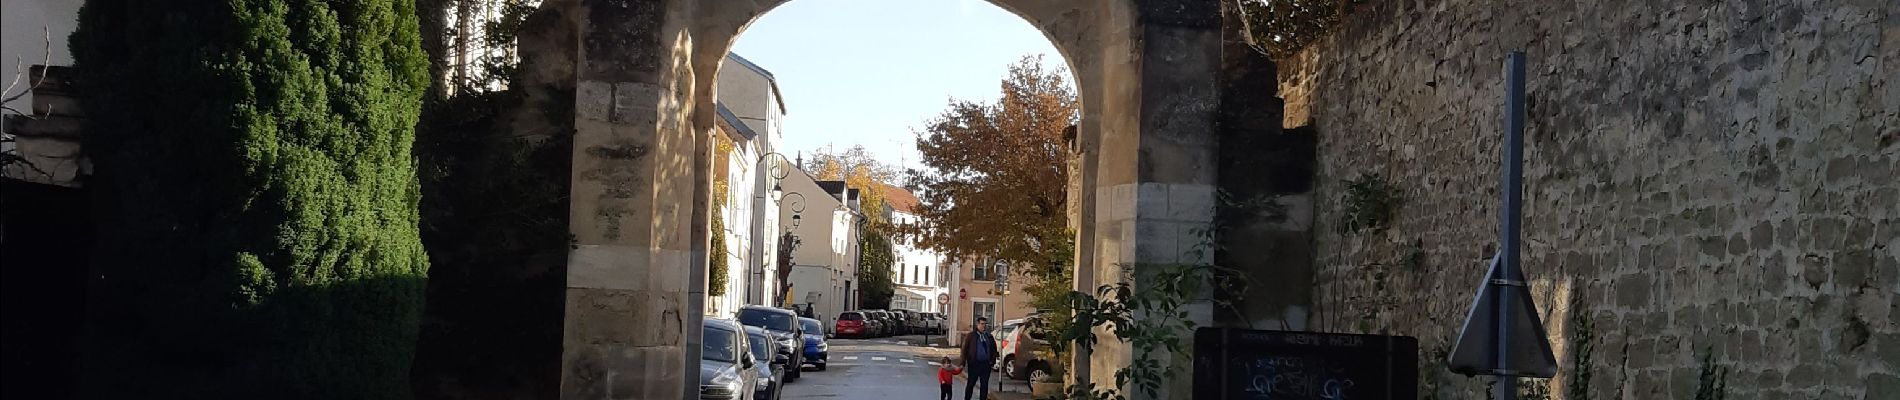 Tour Wandern Saint-Germain-en-Laye - Promenade en automne - Photo